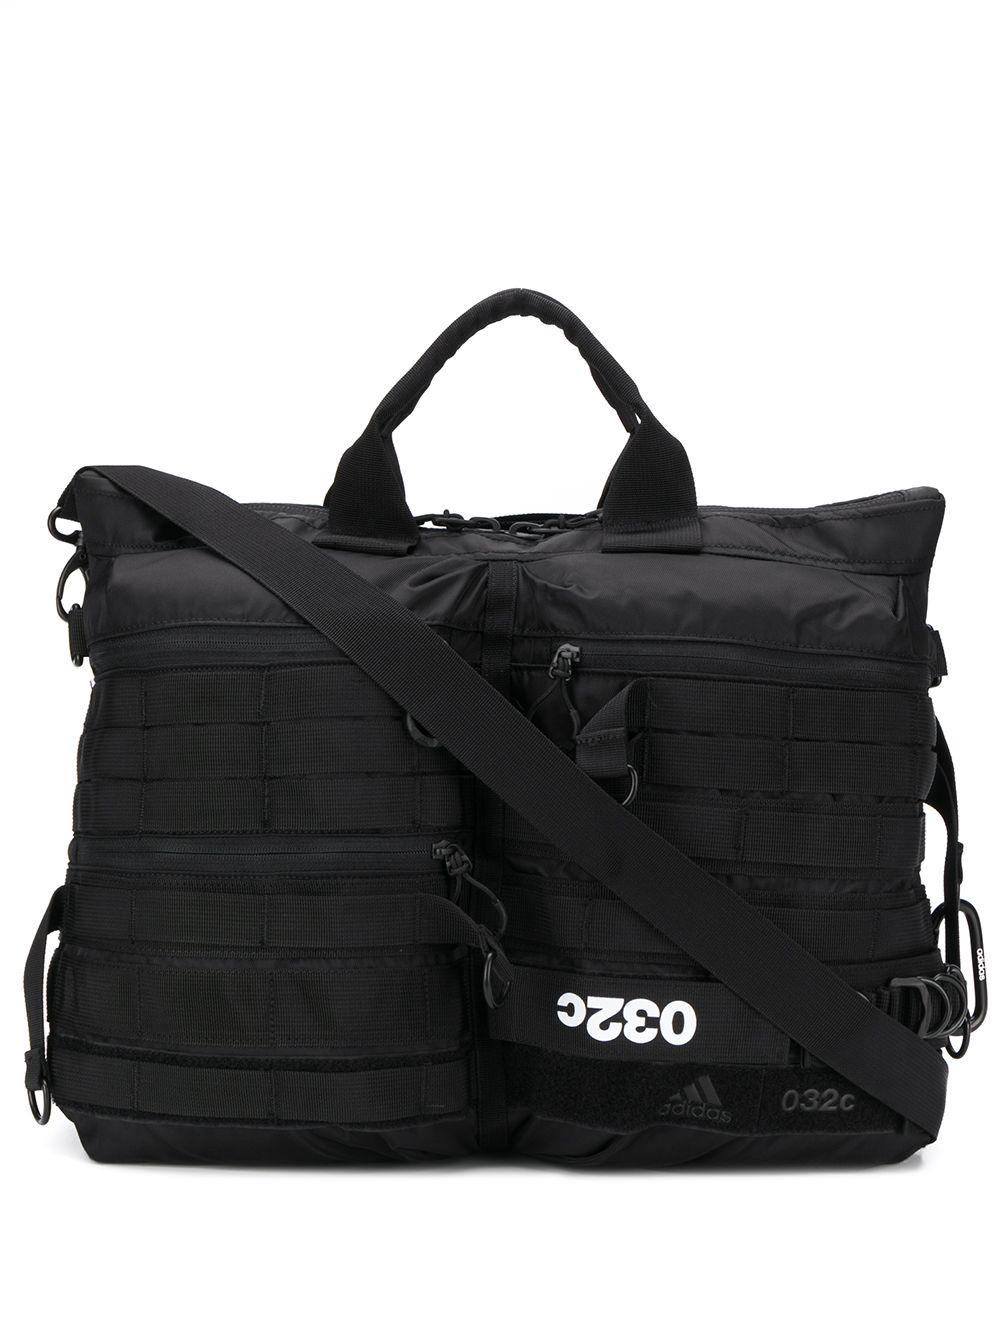 adidas 032c Duffle Bag in Black for Men - Lyst